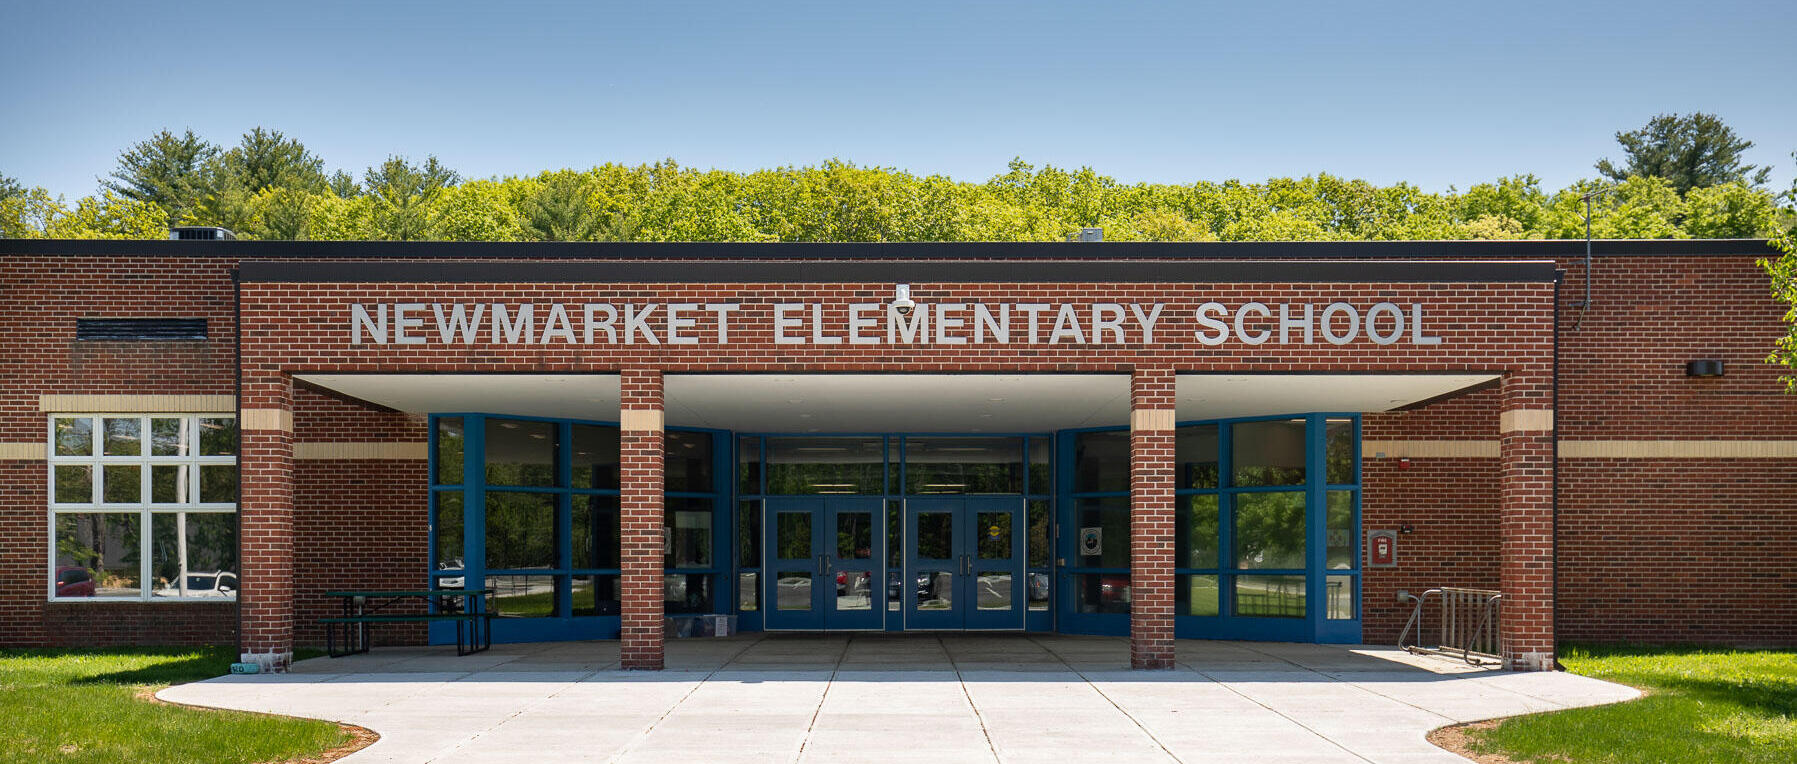 Newmarket Elementary School